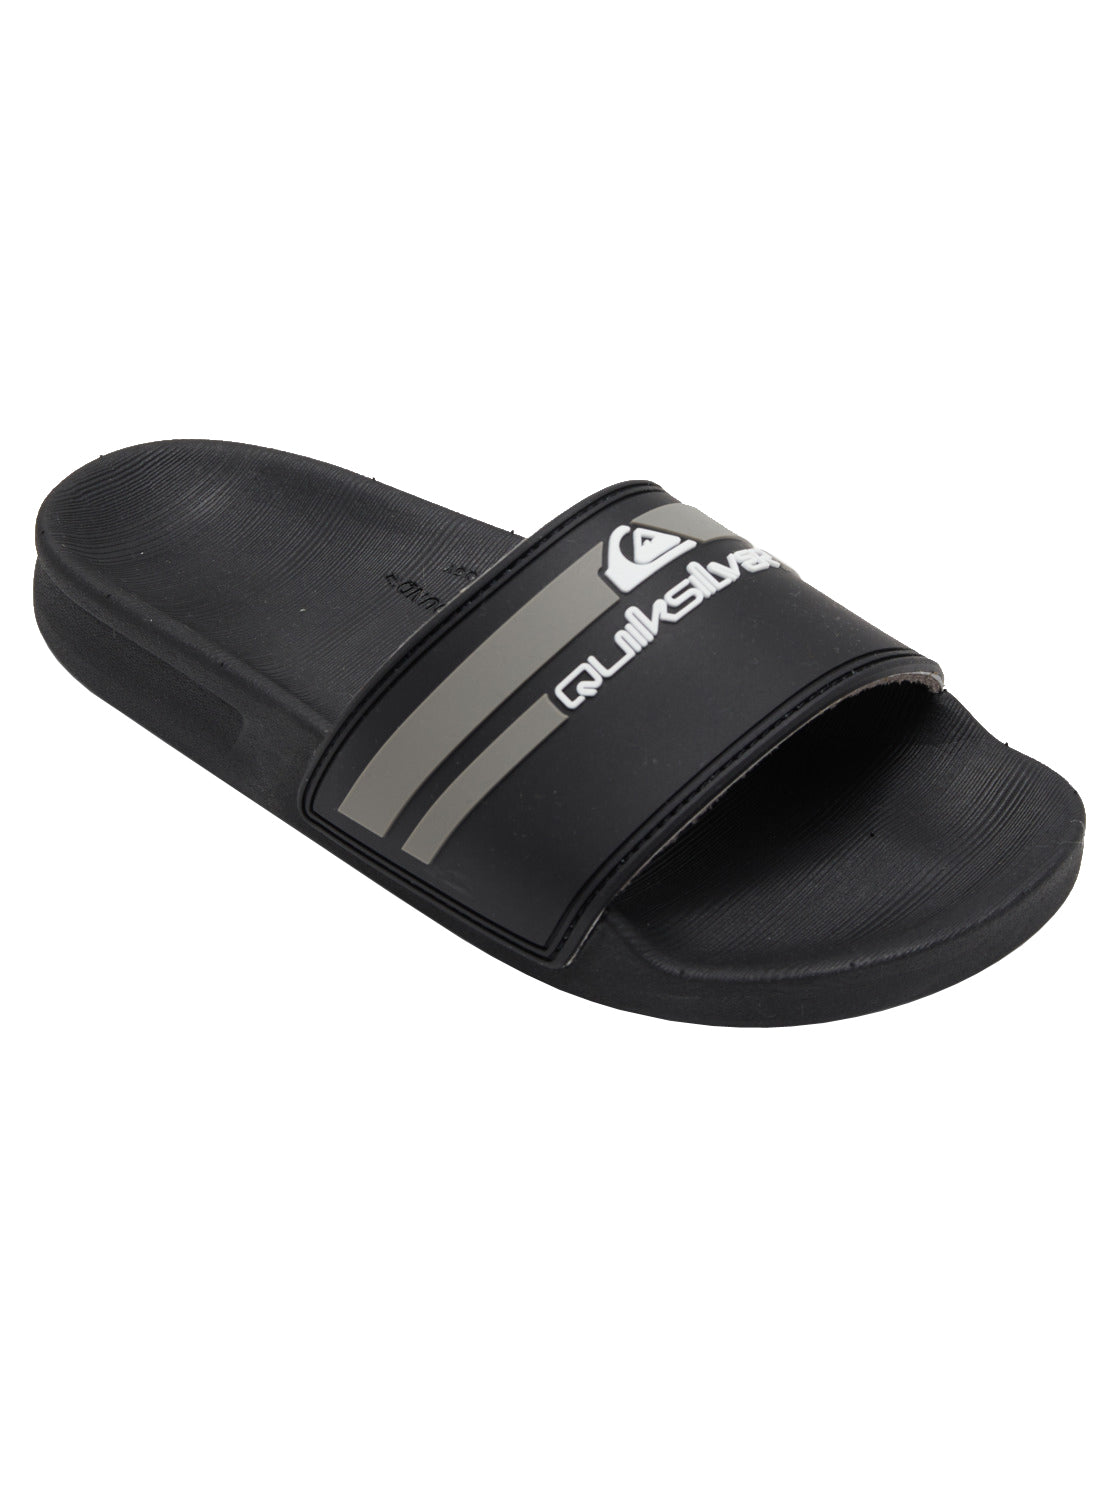 Quiksilver Rivi Slide Youth Sandal XKSK-Black-Grey-Black 12 C